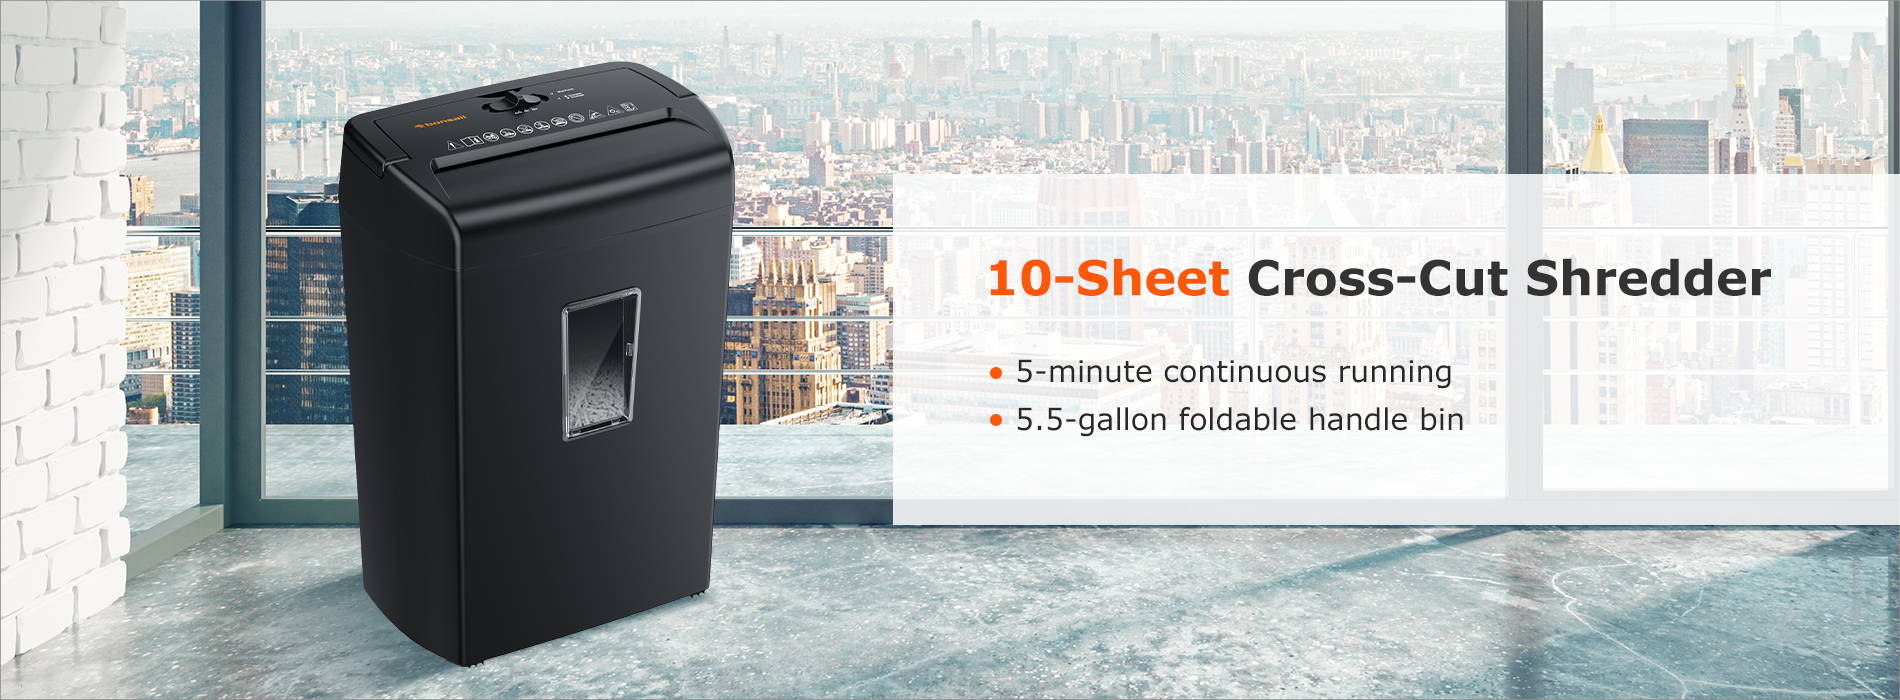 10-Sheet Cross-Cut Shredder 5-minute continuous running 5.5-gallon foldabel handle bin 